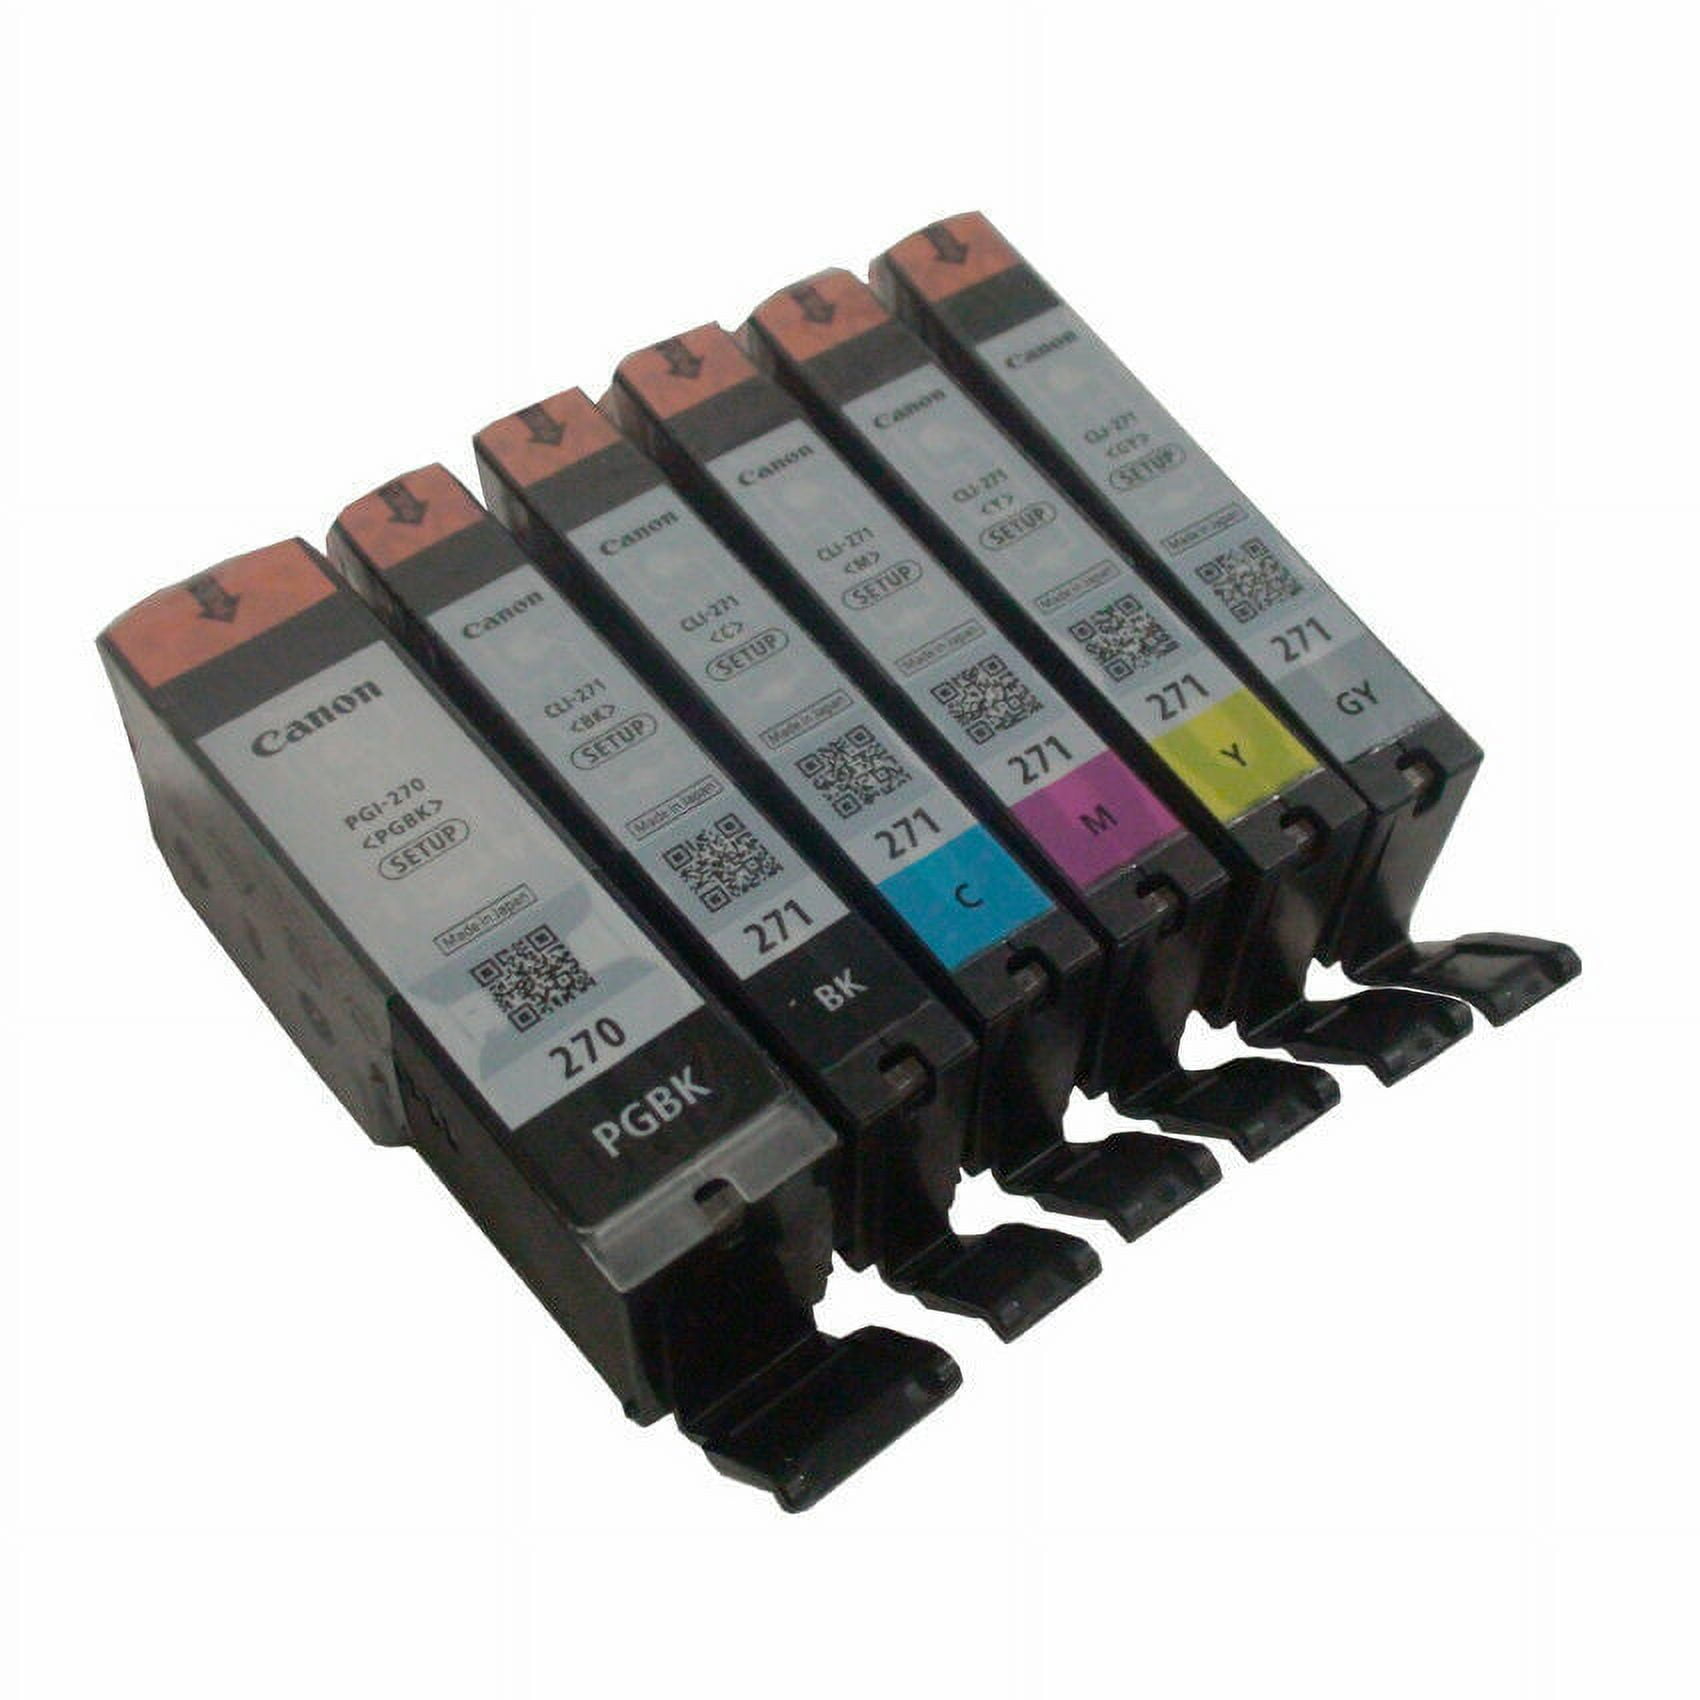 Set of 5 GENUINE CANON Setup Cartridges FOR TR7750, TS6150, TS8150, TS9150  etc.